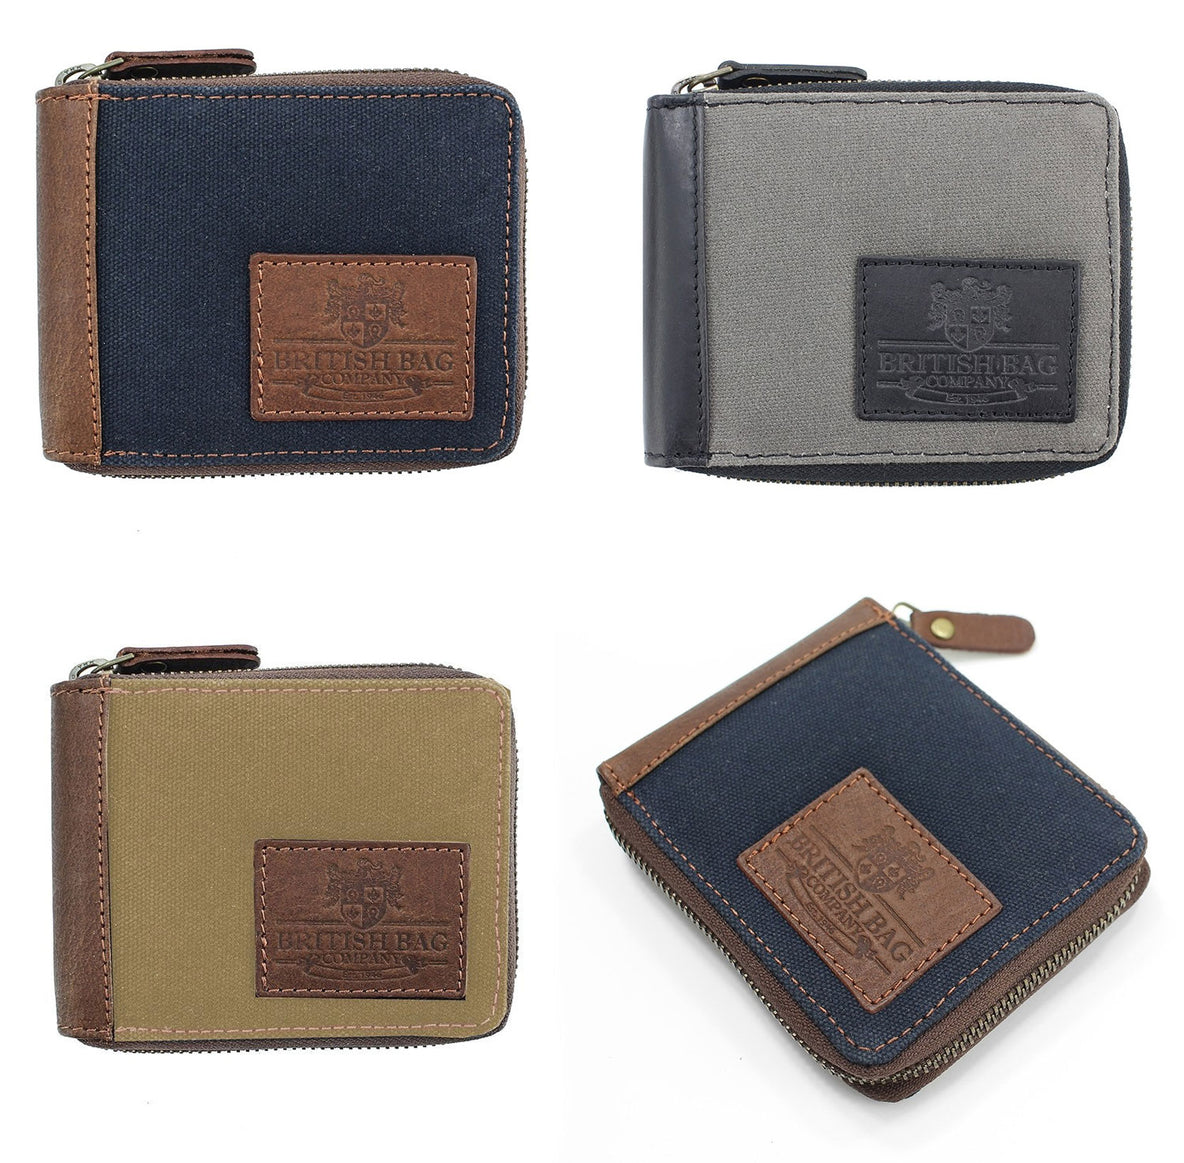 British Bag Co. Waxed Canvas Zip Wallet | Blue Grey Green 